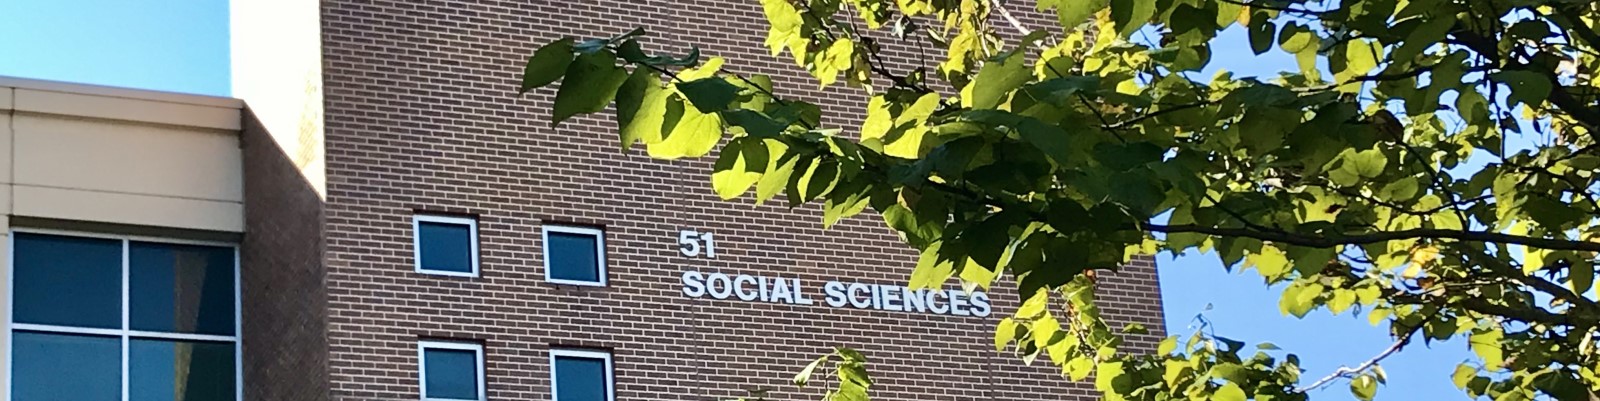 Social Sciences Building Number 51